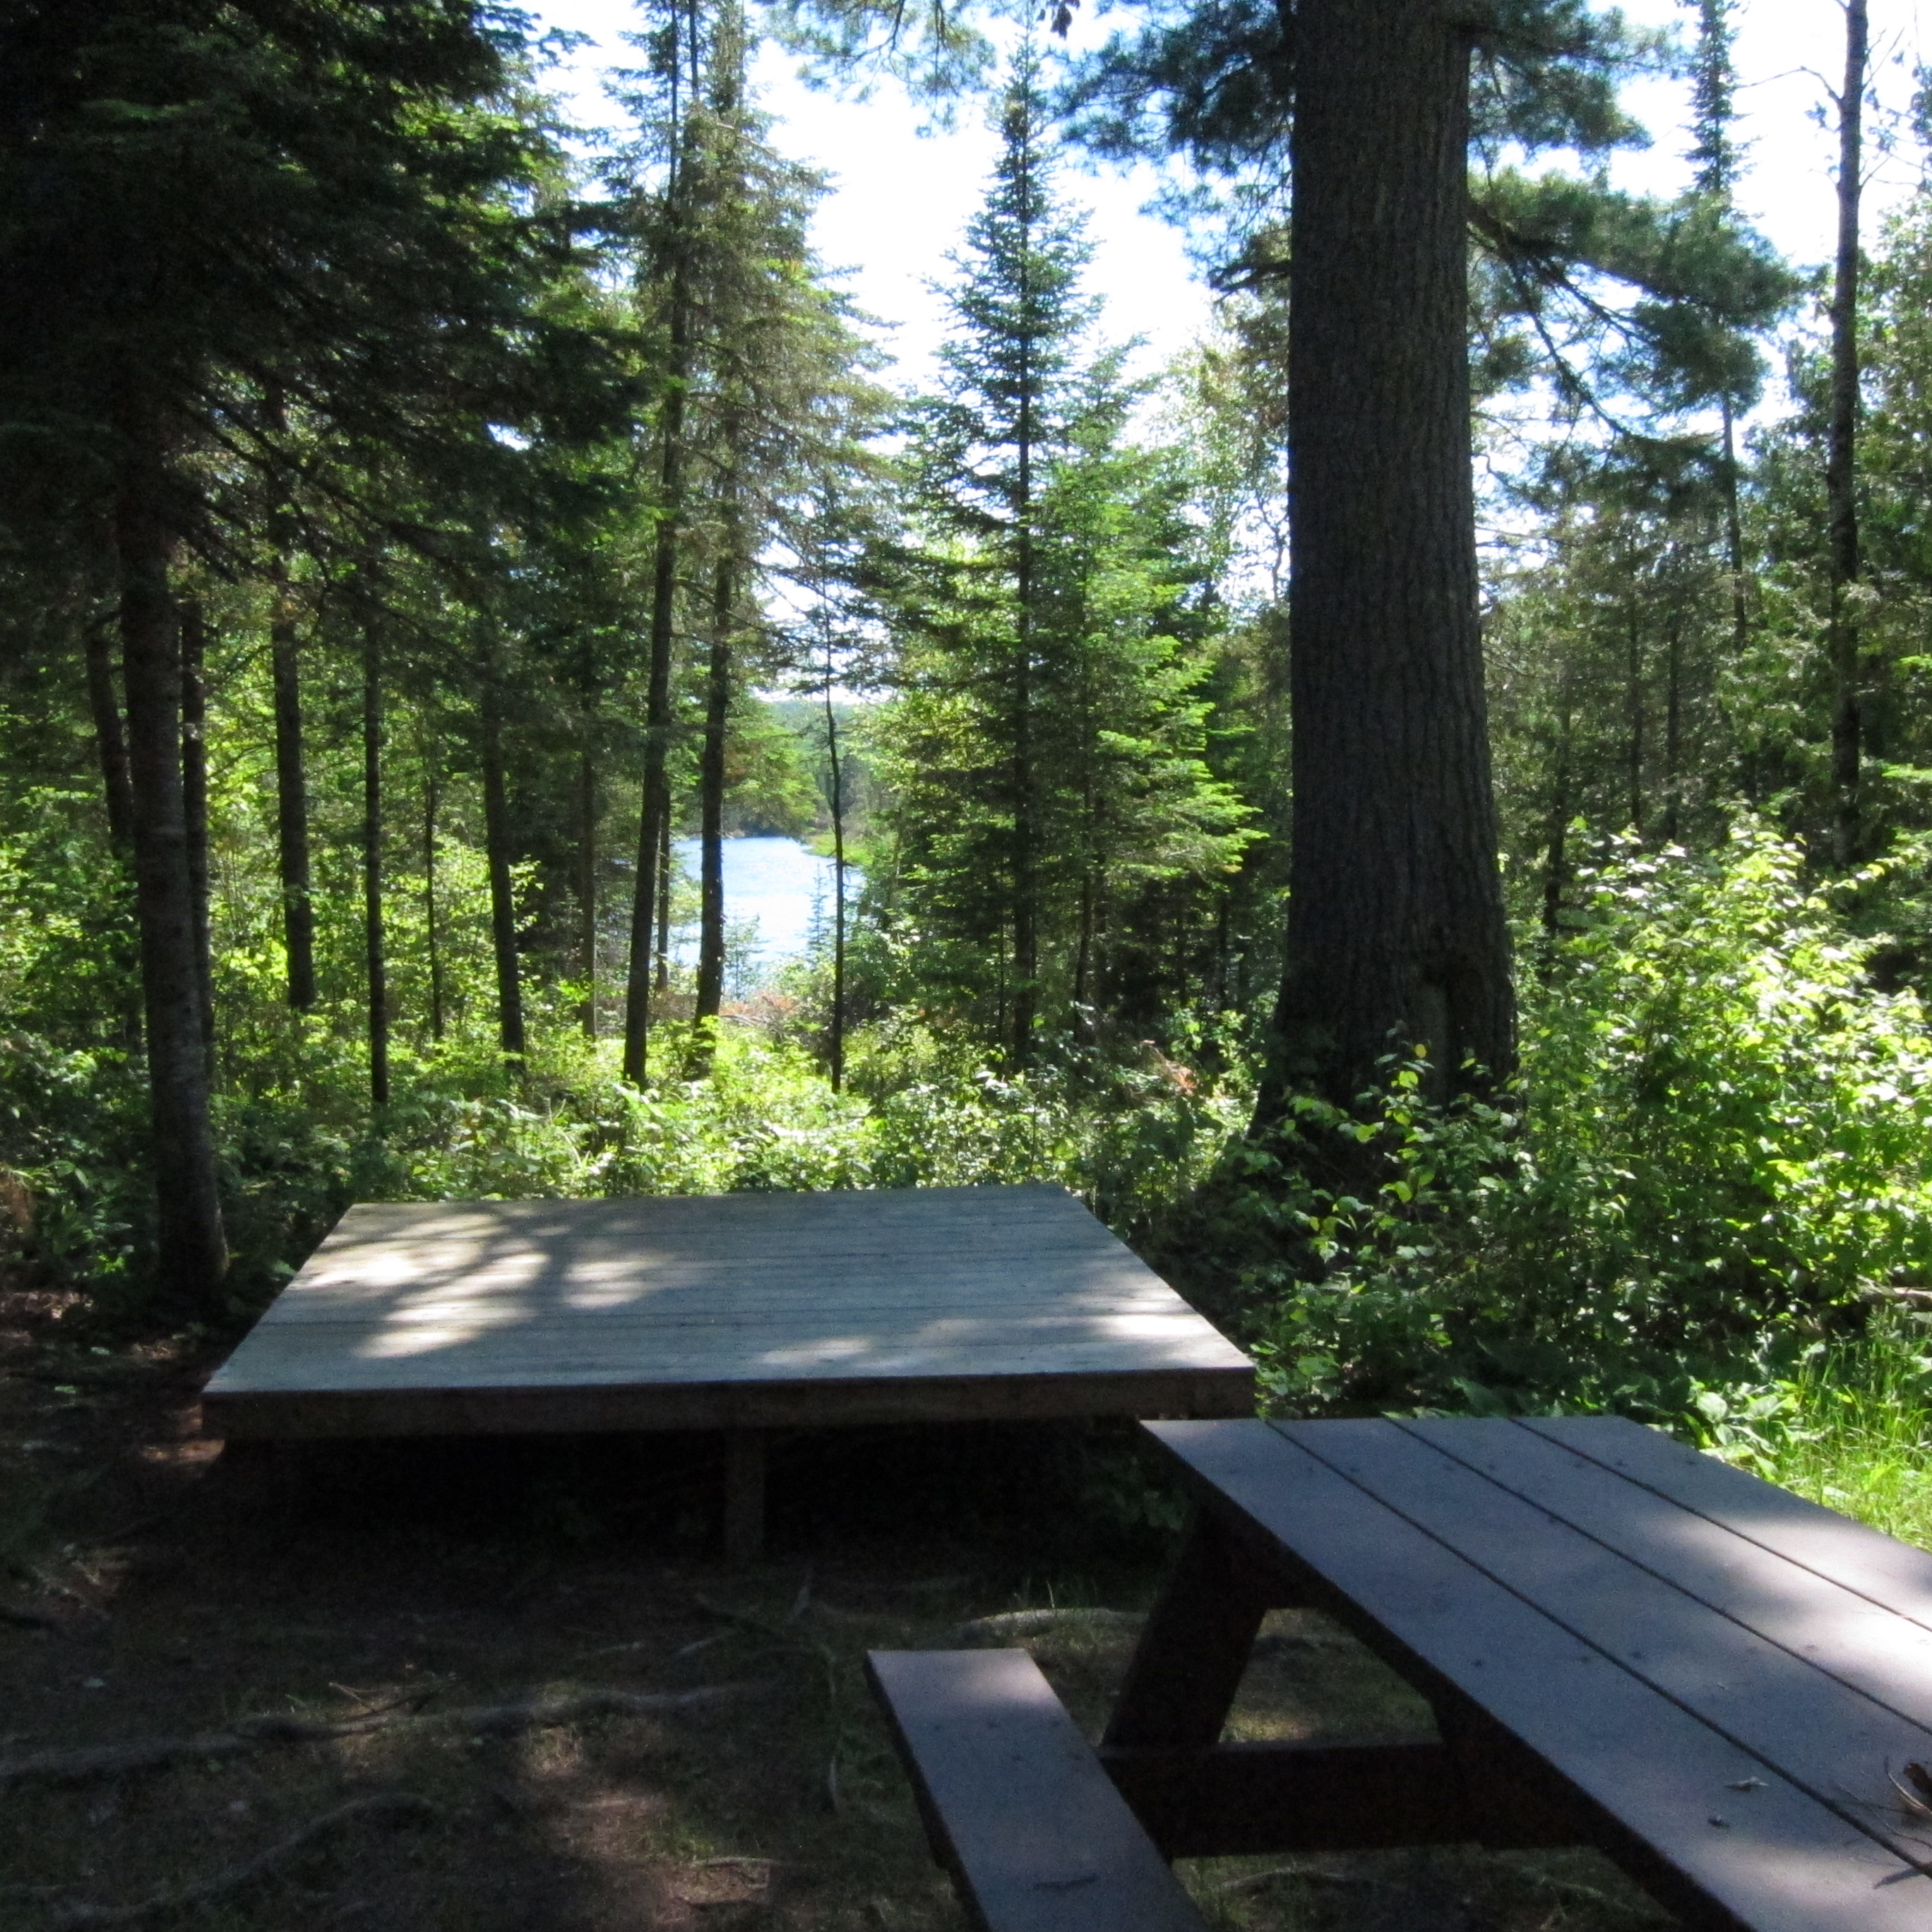 Campsite near large evergreen trees near river.